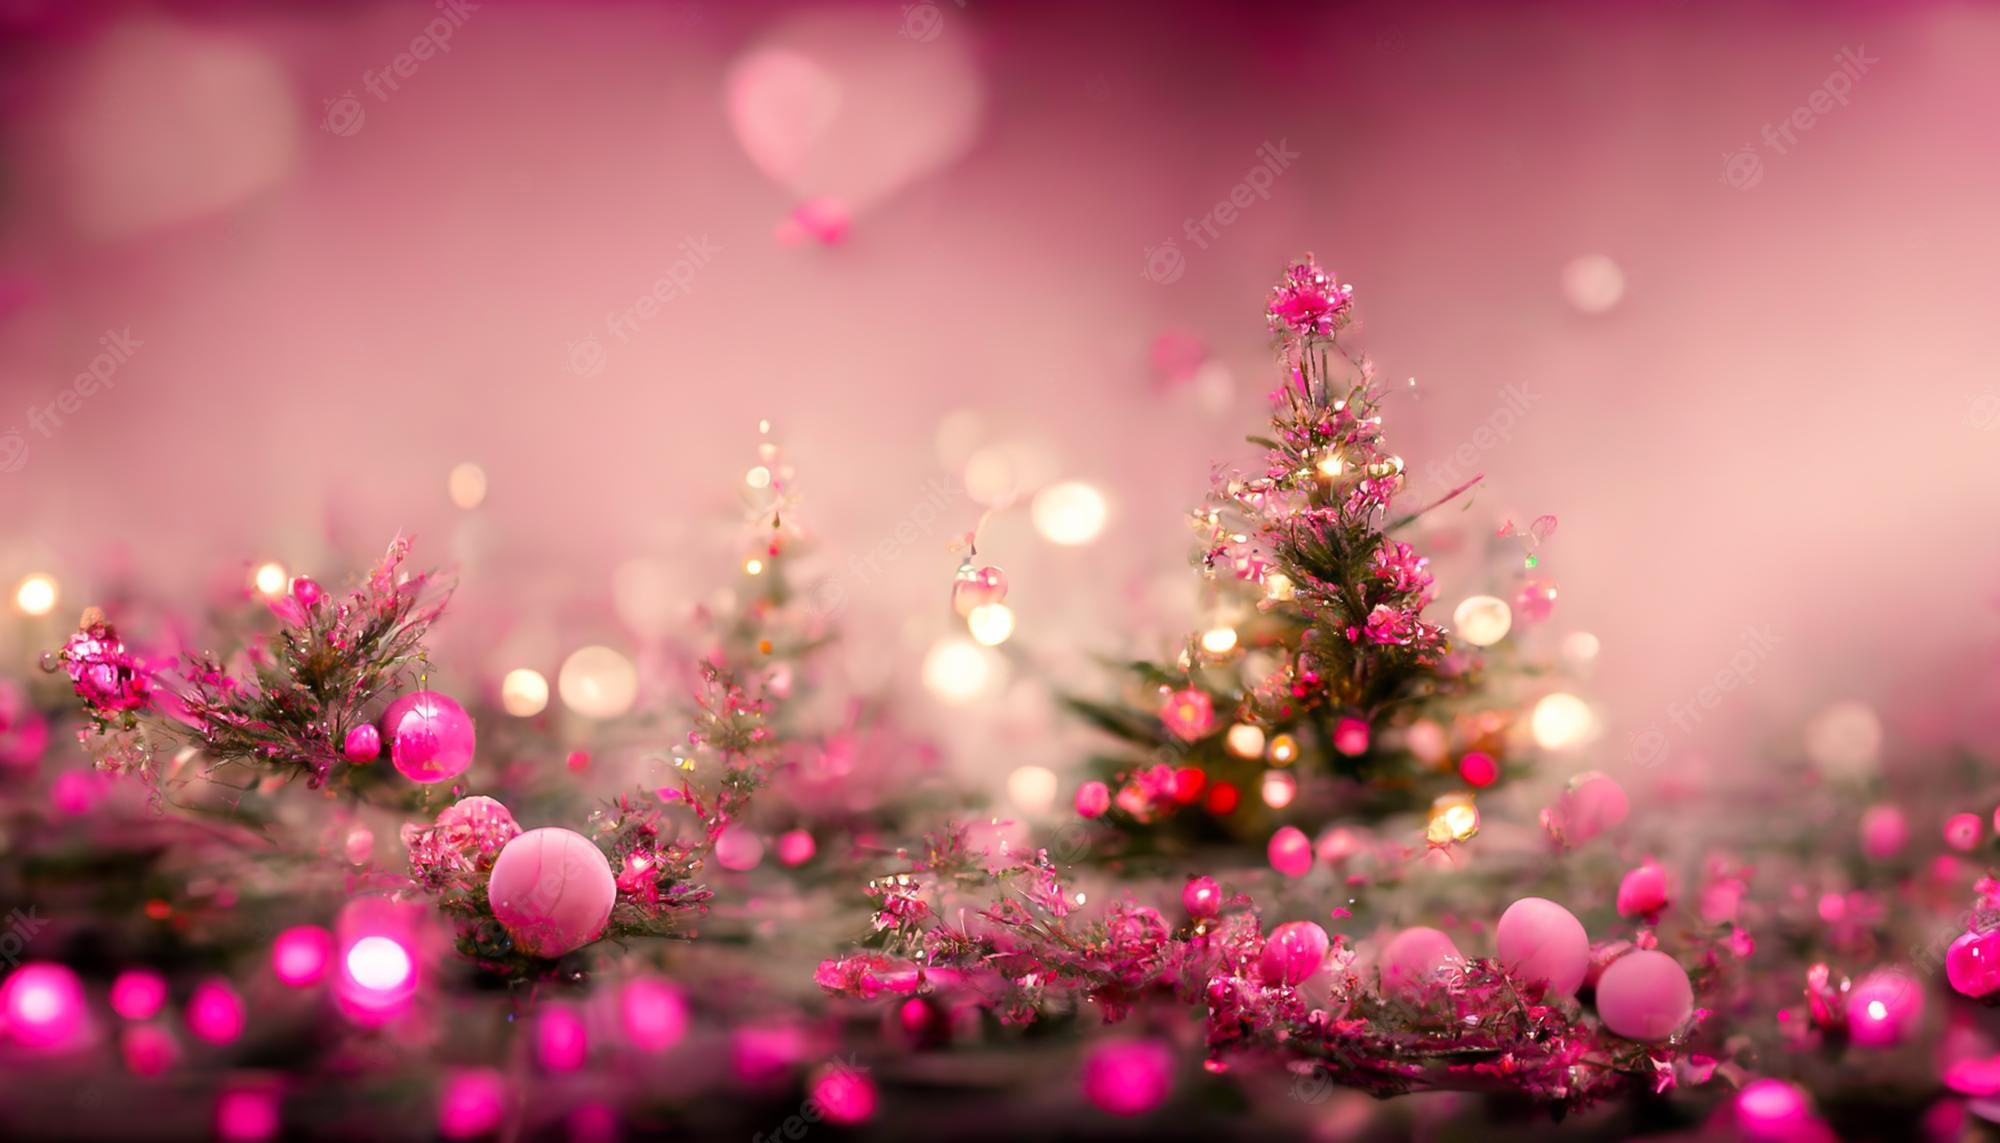 Premium Photo. Merry christmas HD pink wallpaper beautiful artwork seasonal illustration and copy space background